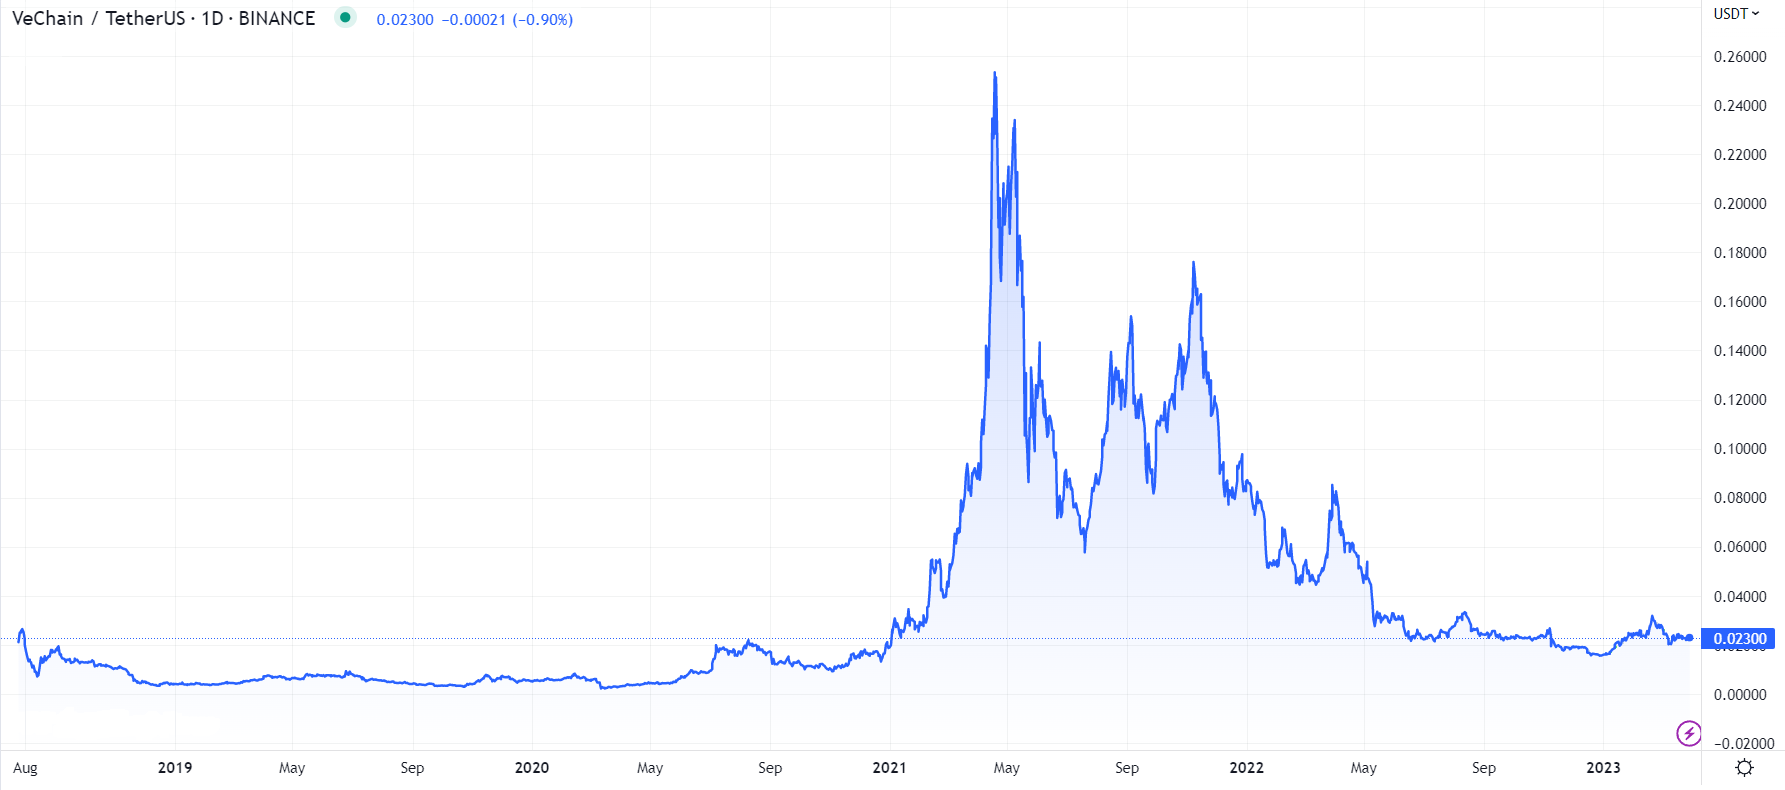 VeChain INR (VET-INR) Price, Value, News & History - Yahoo Finance